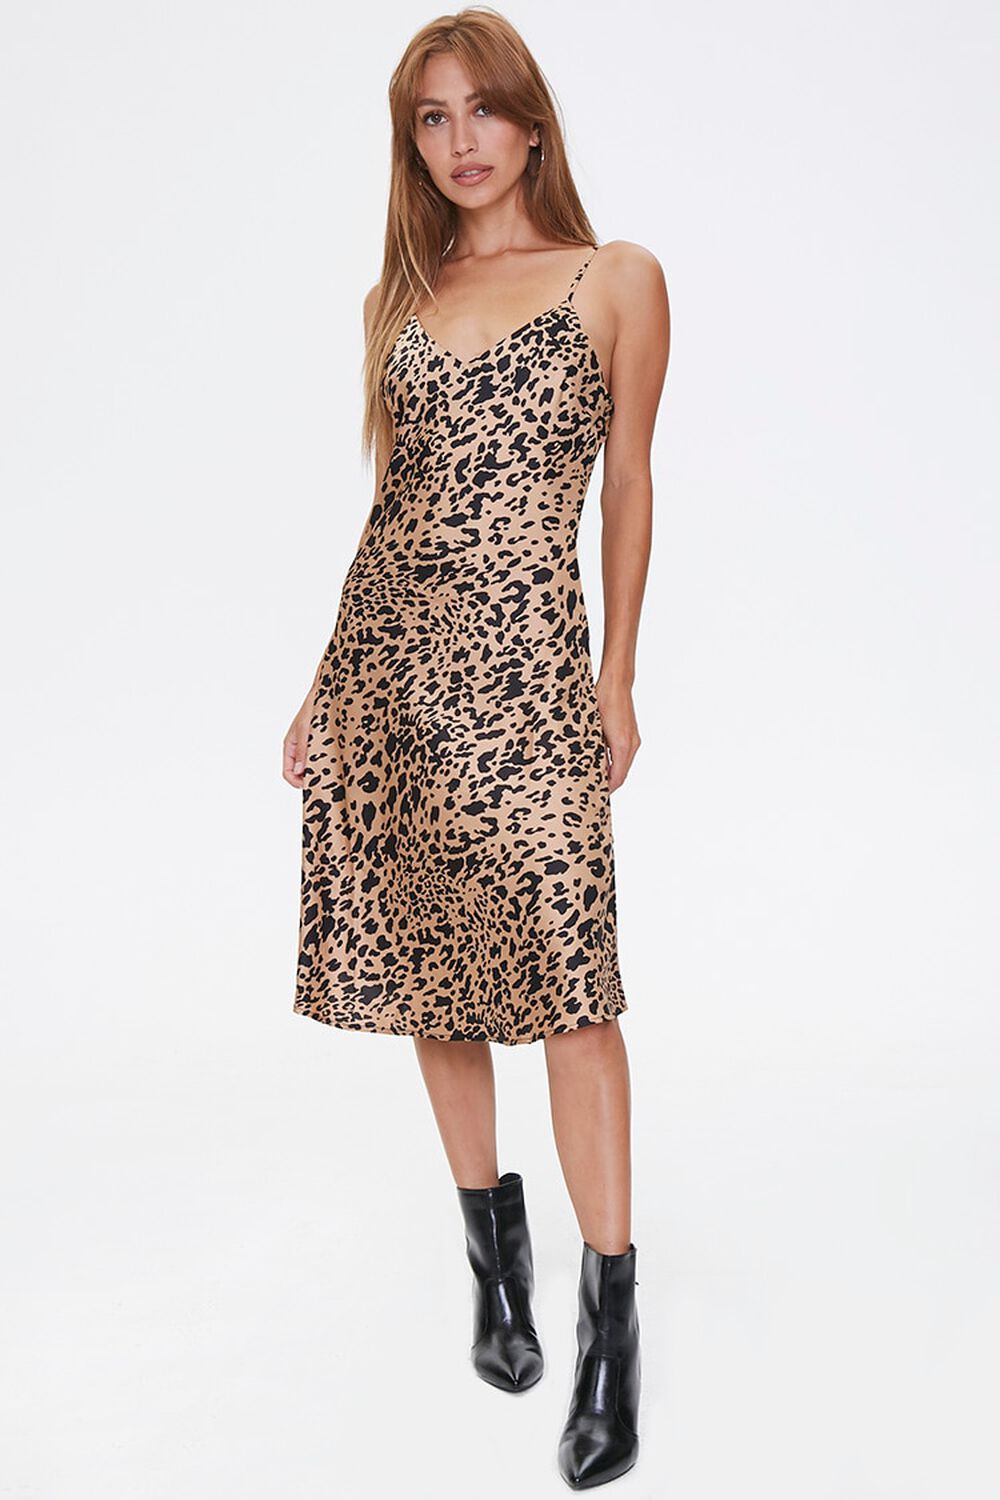 Cheetah Print Slip Dress